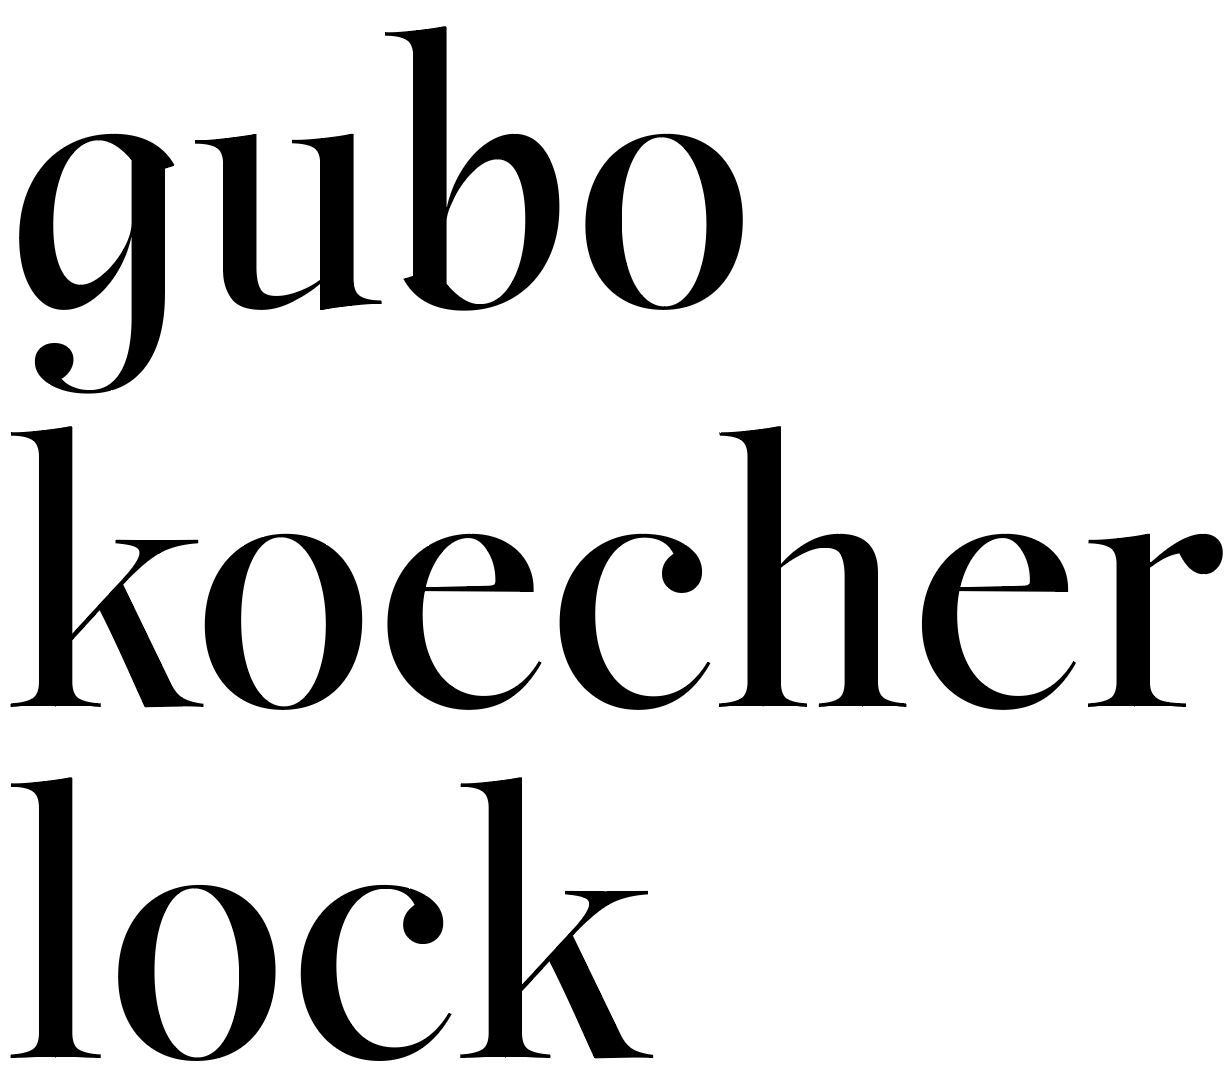 gubo koecher lock